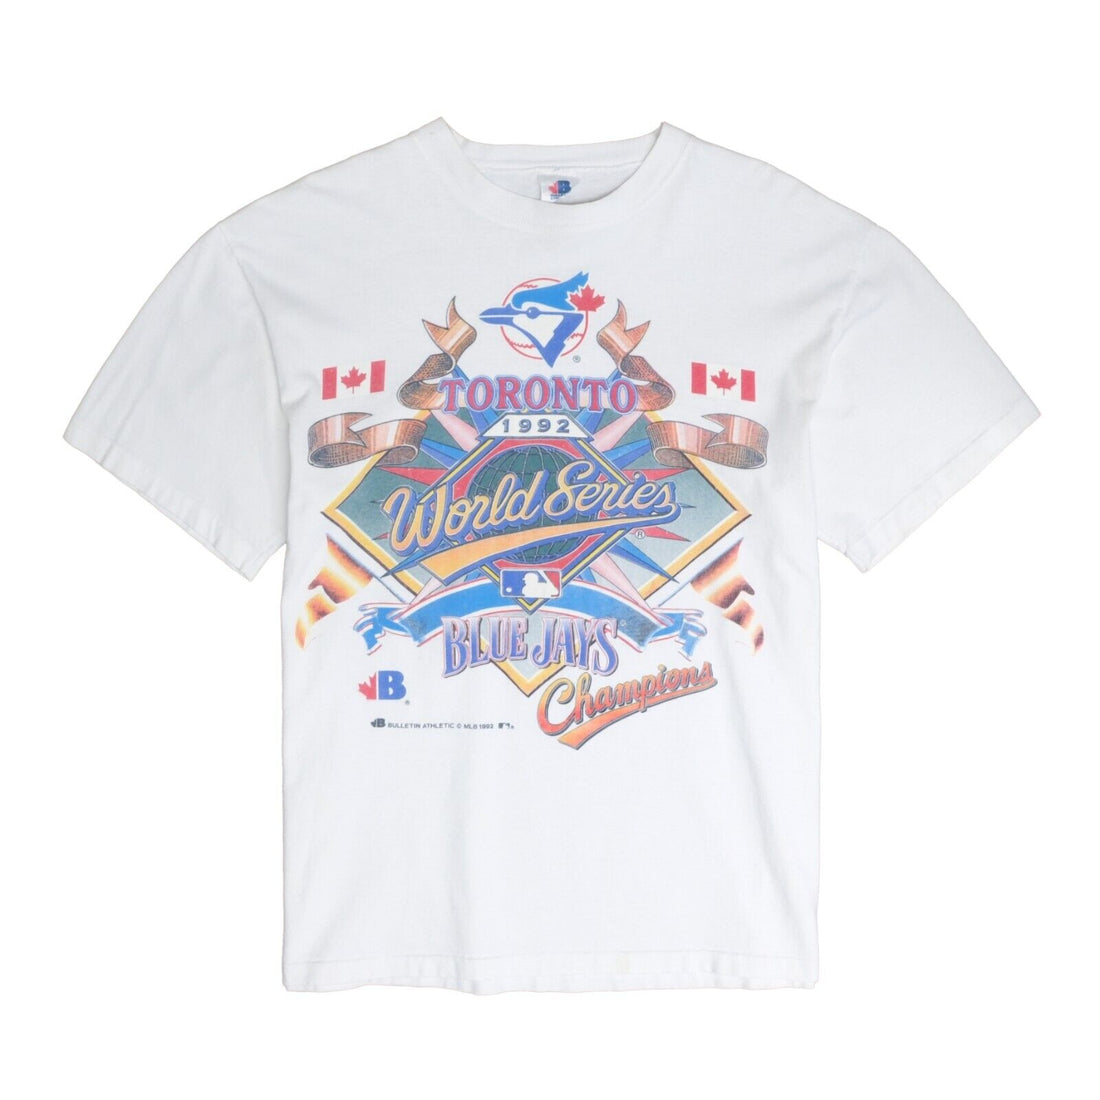 Vintage Toronto Blue Jays World Series Champions T-Shirt Size Small 1992 90s MLB